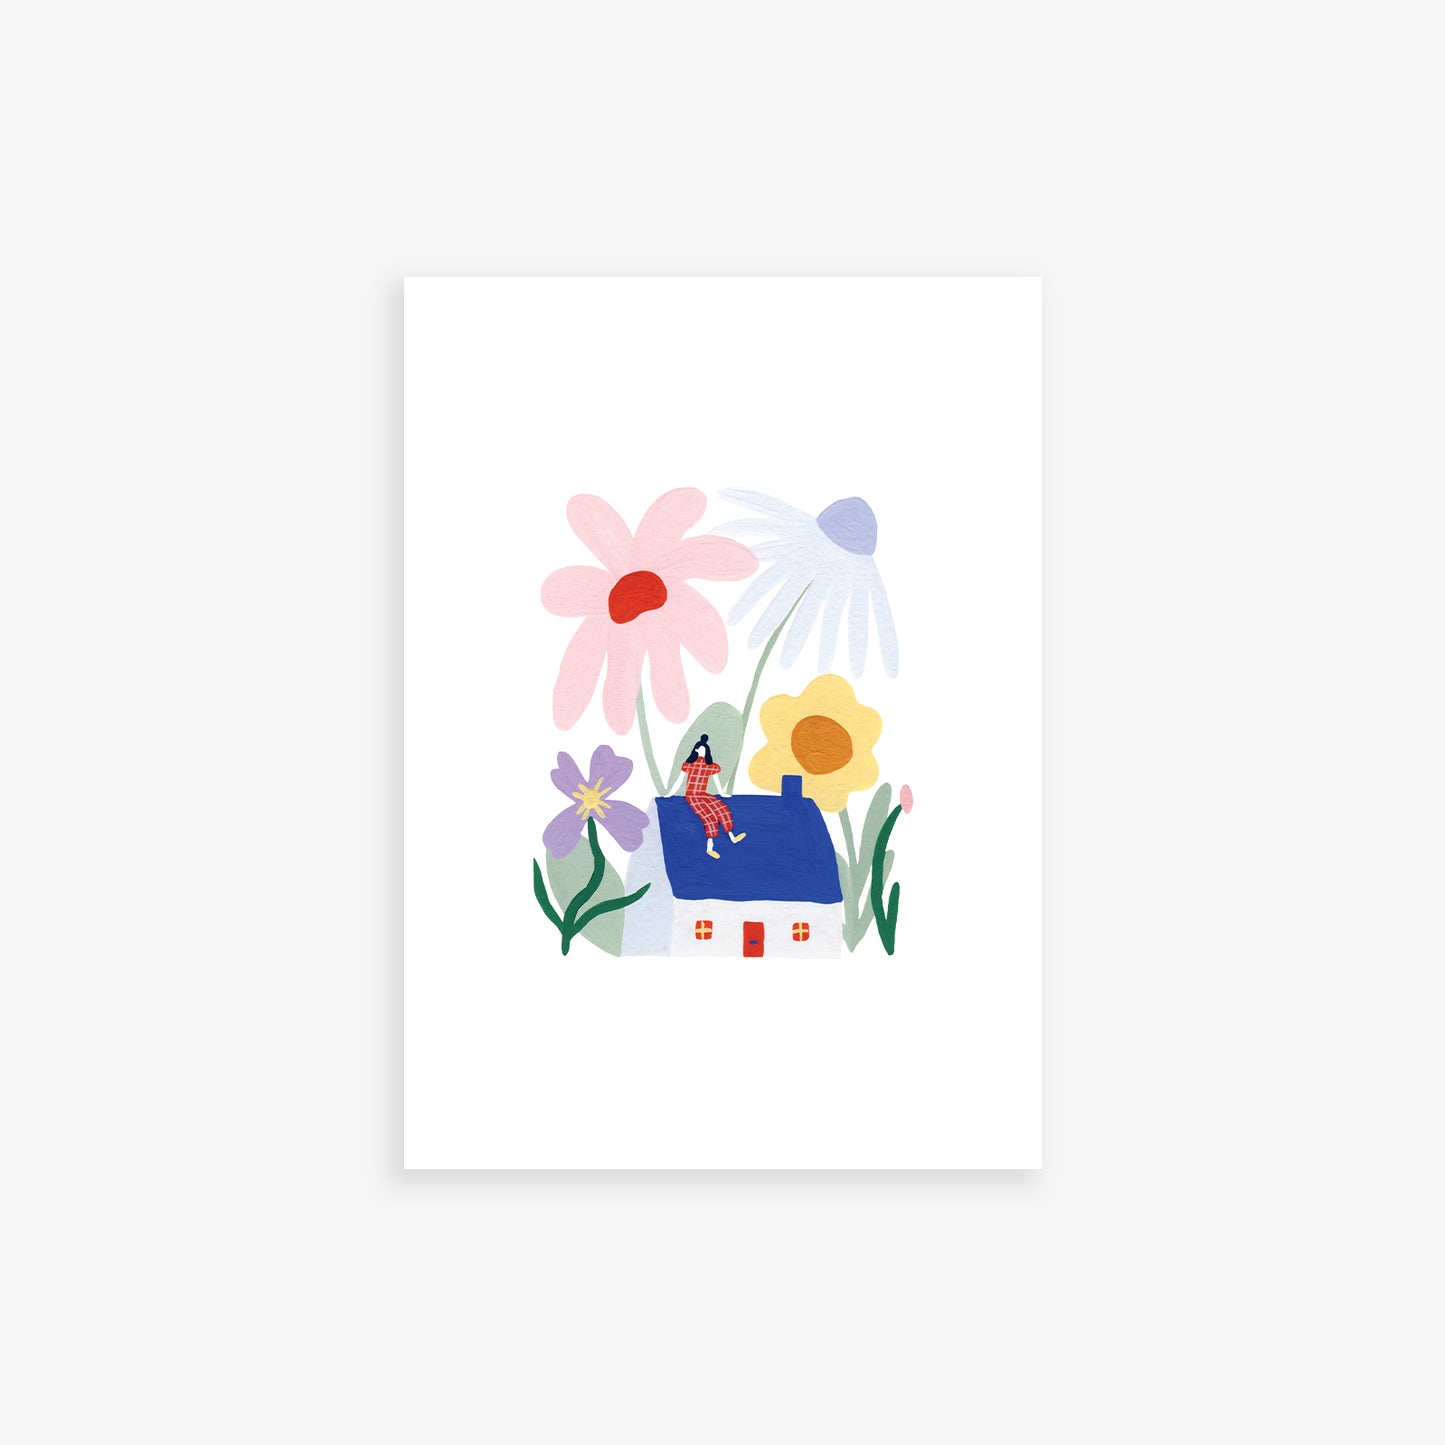 Tiny House with Wildflowers 5x7" Fine Art Print